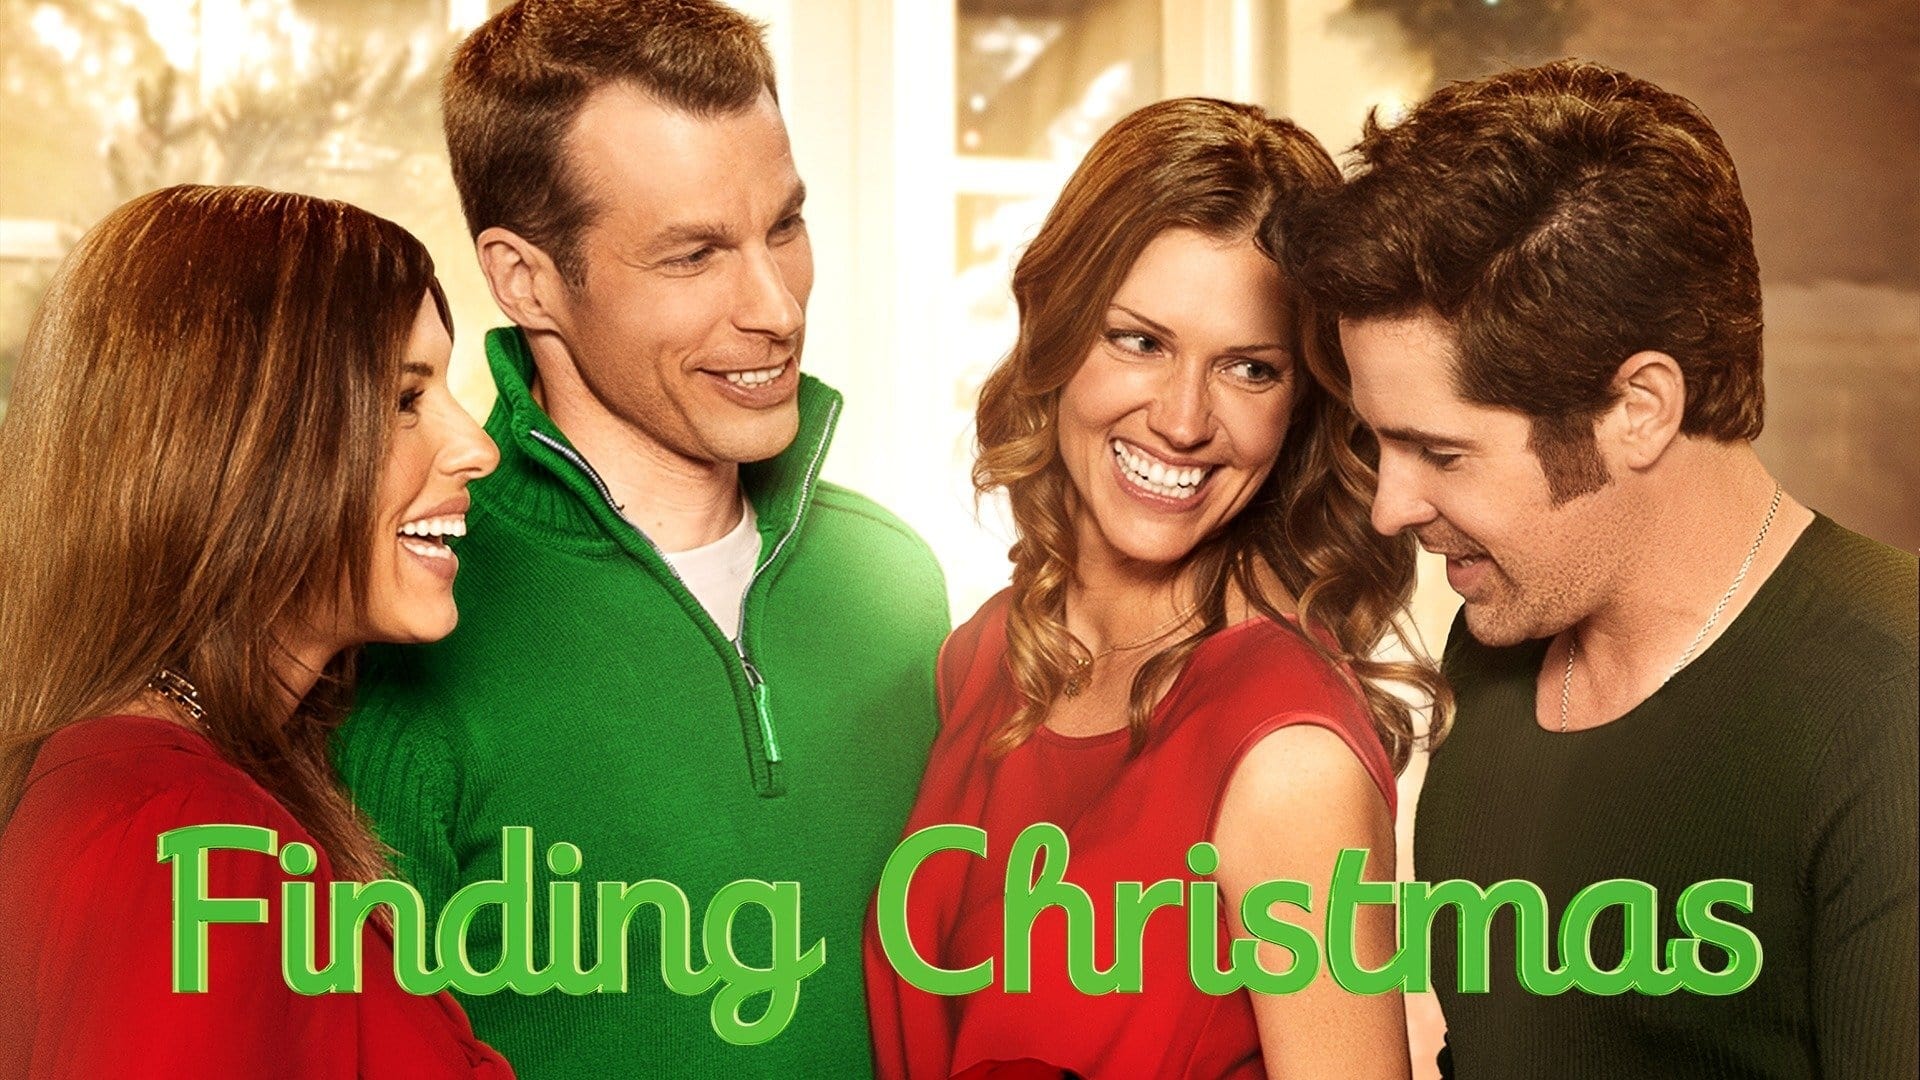 Finding Christmas (2013)